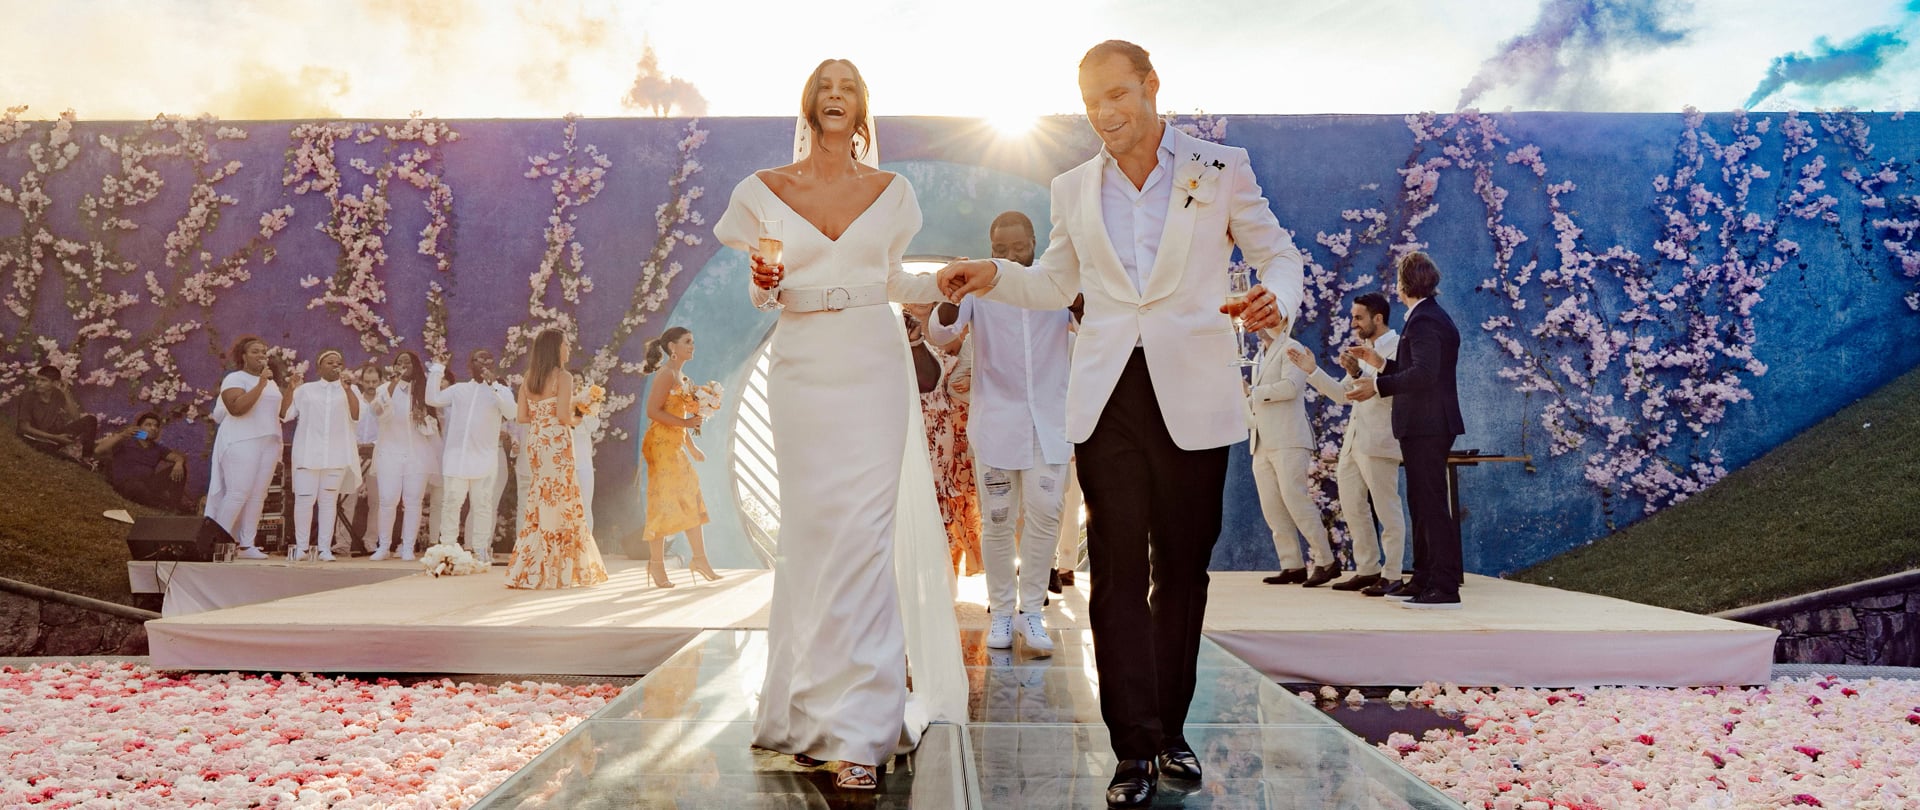 Charlotte & Tom Wedding Video Filmed at Careyes, Mexico